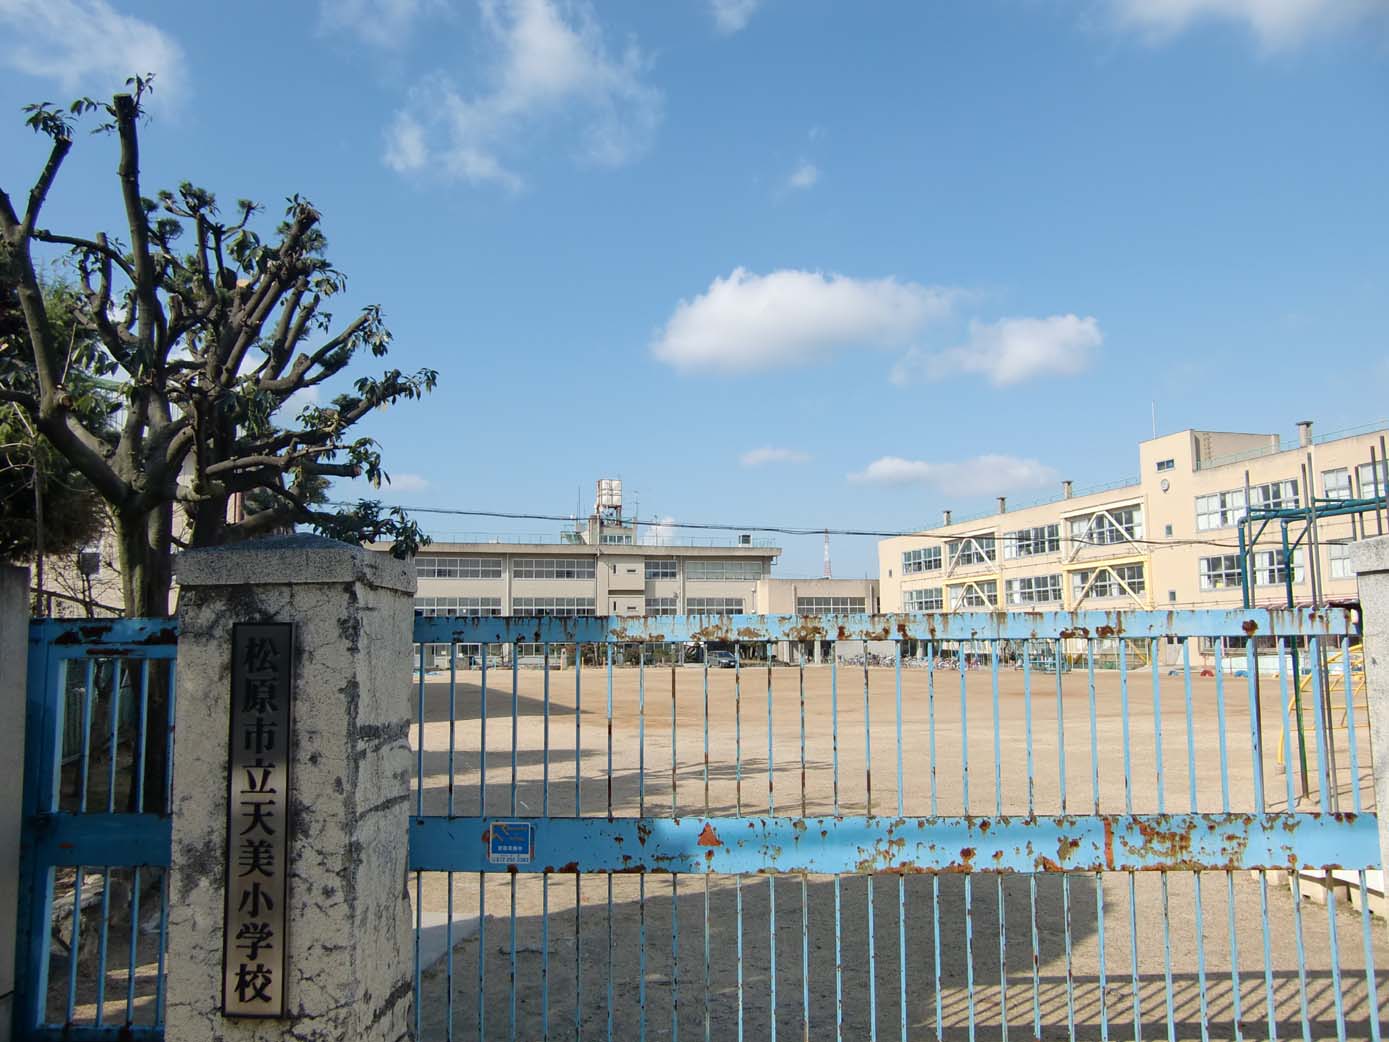 Primary school. Matsubara Municipal Amami up to elementary school (elementary school) 449m